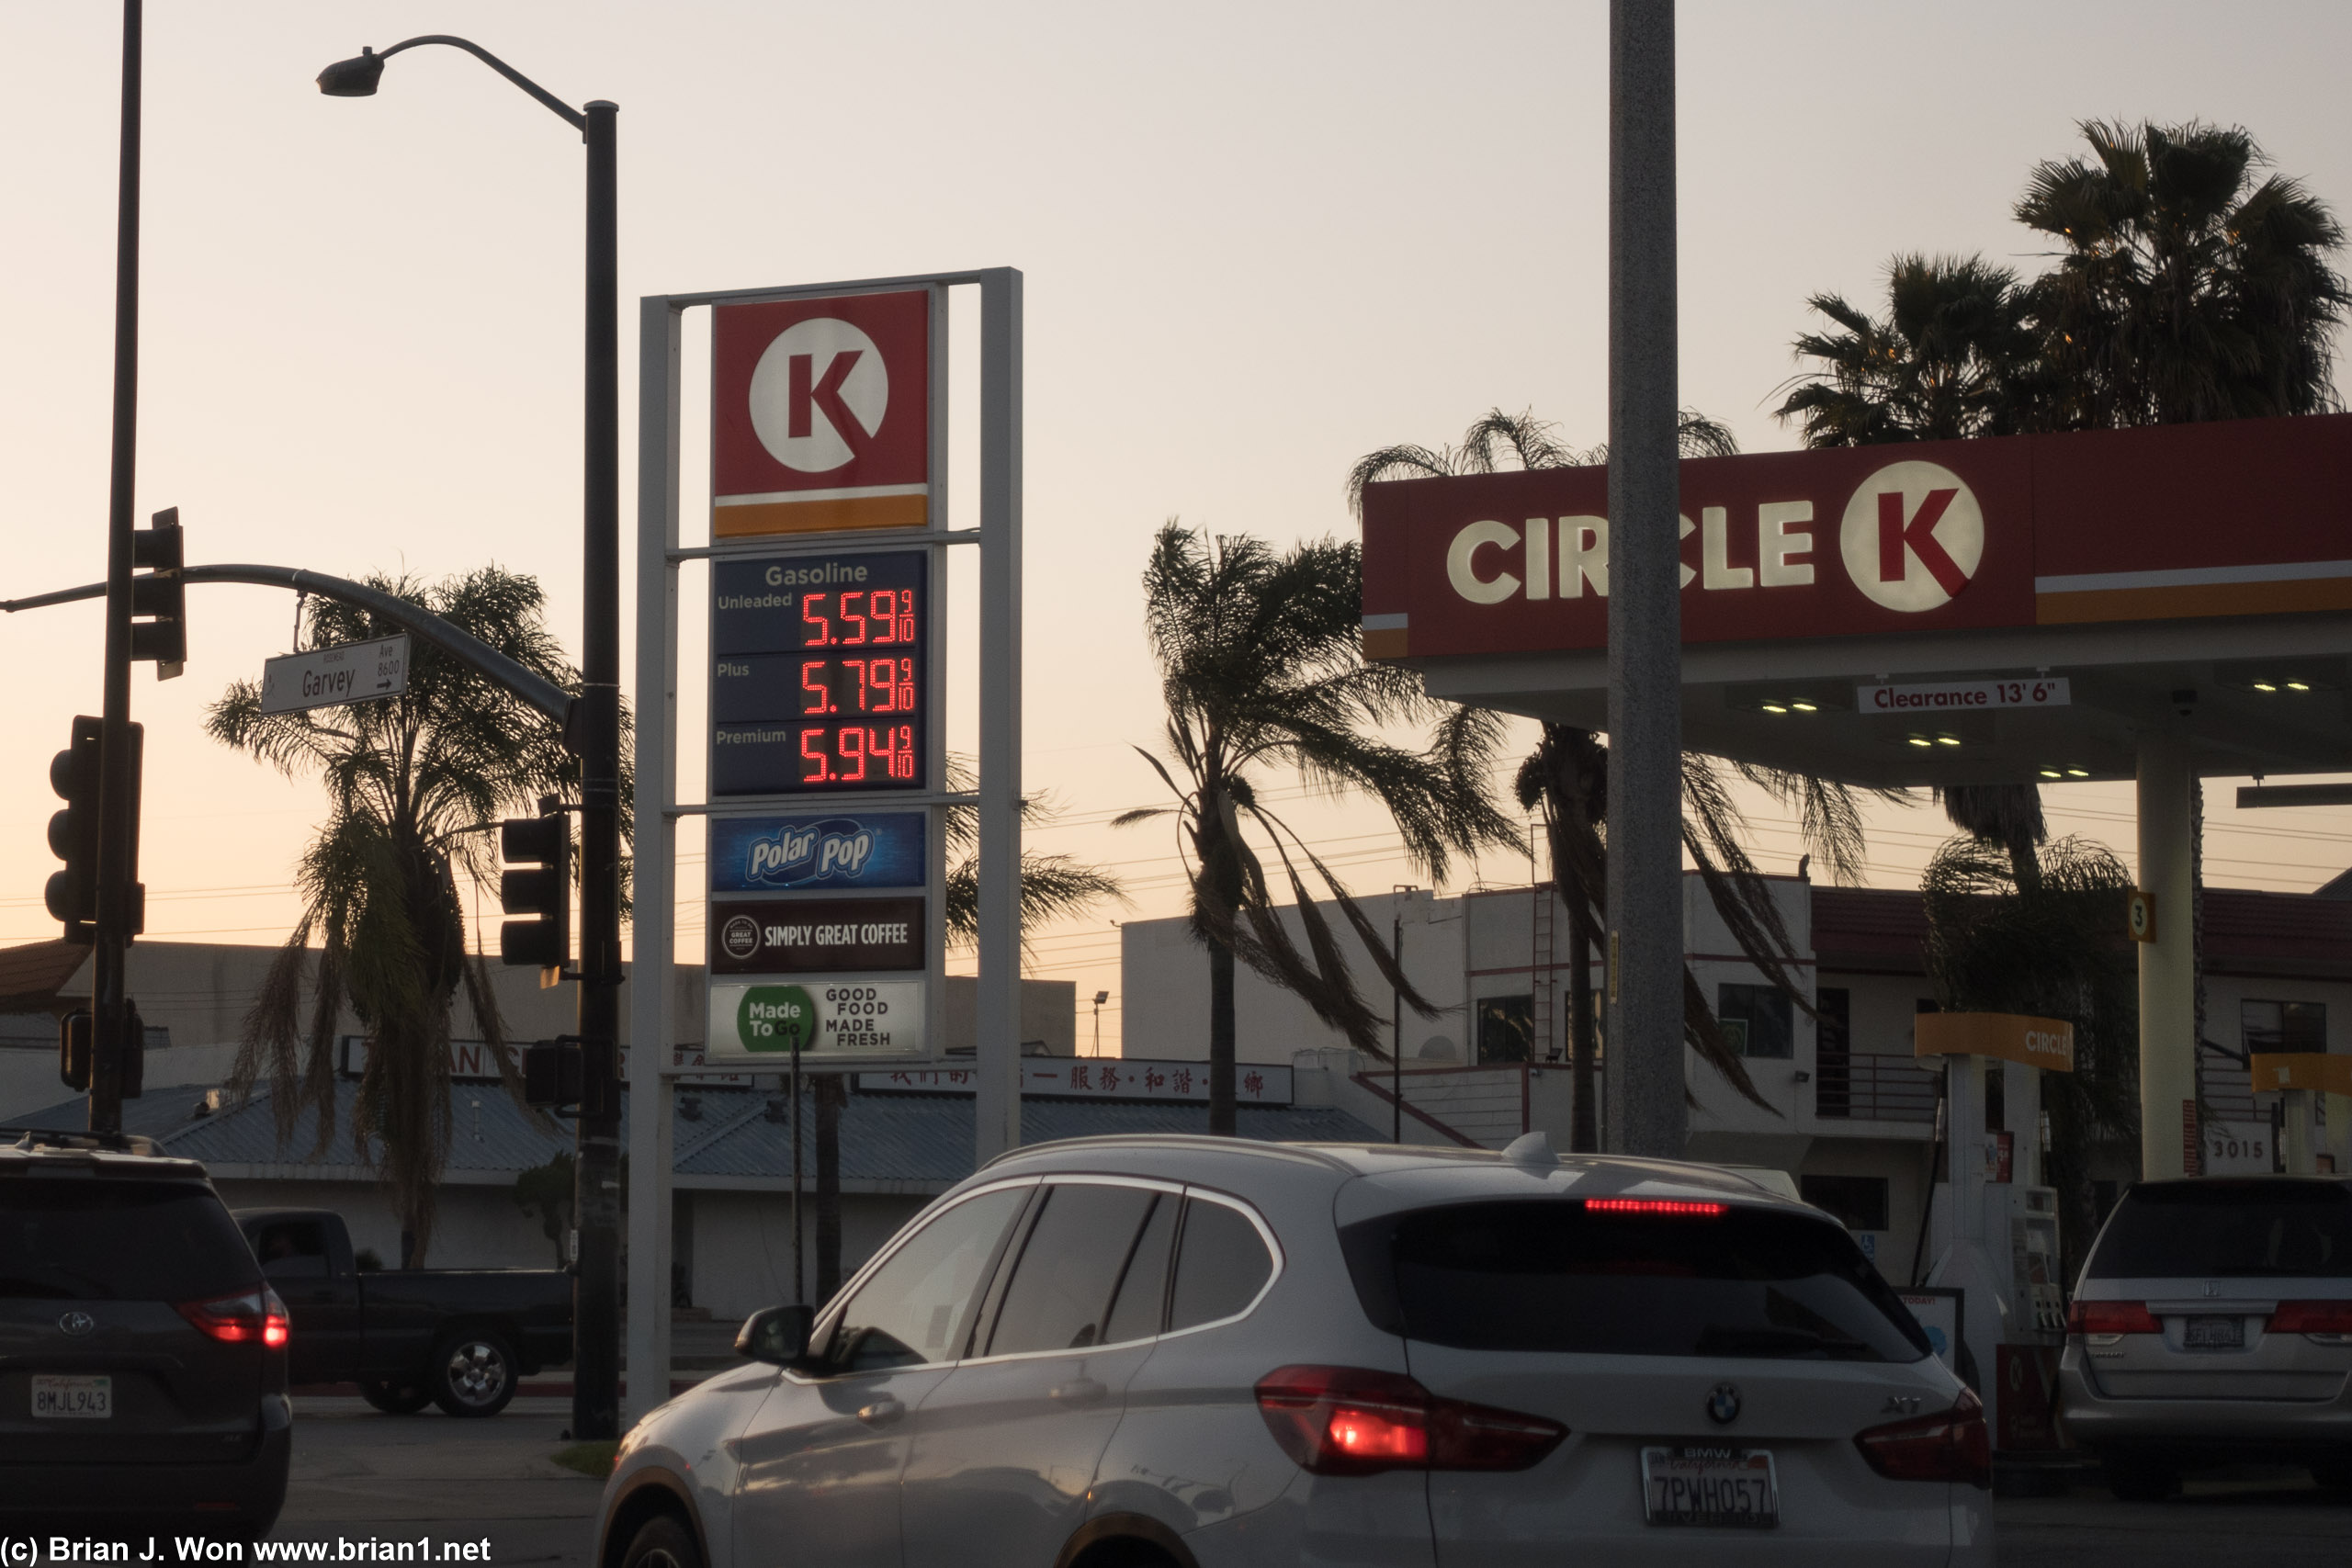 Woah, gas under $6 a gallon, including premium.